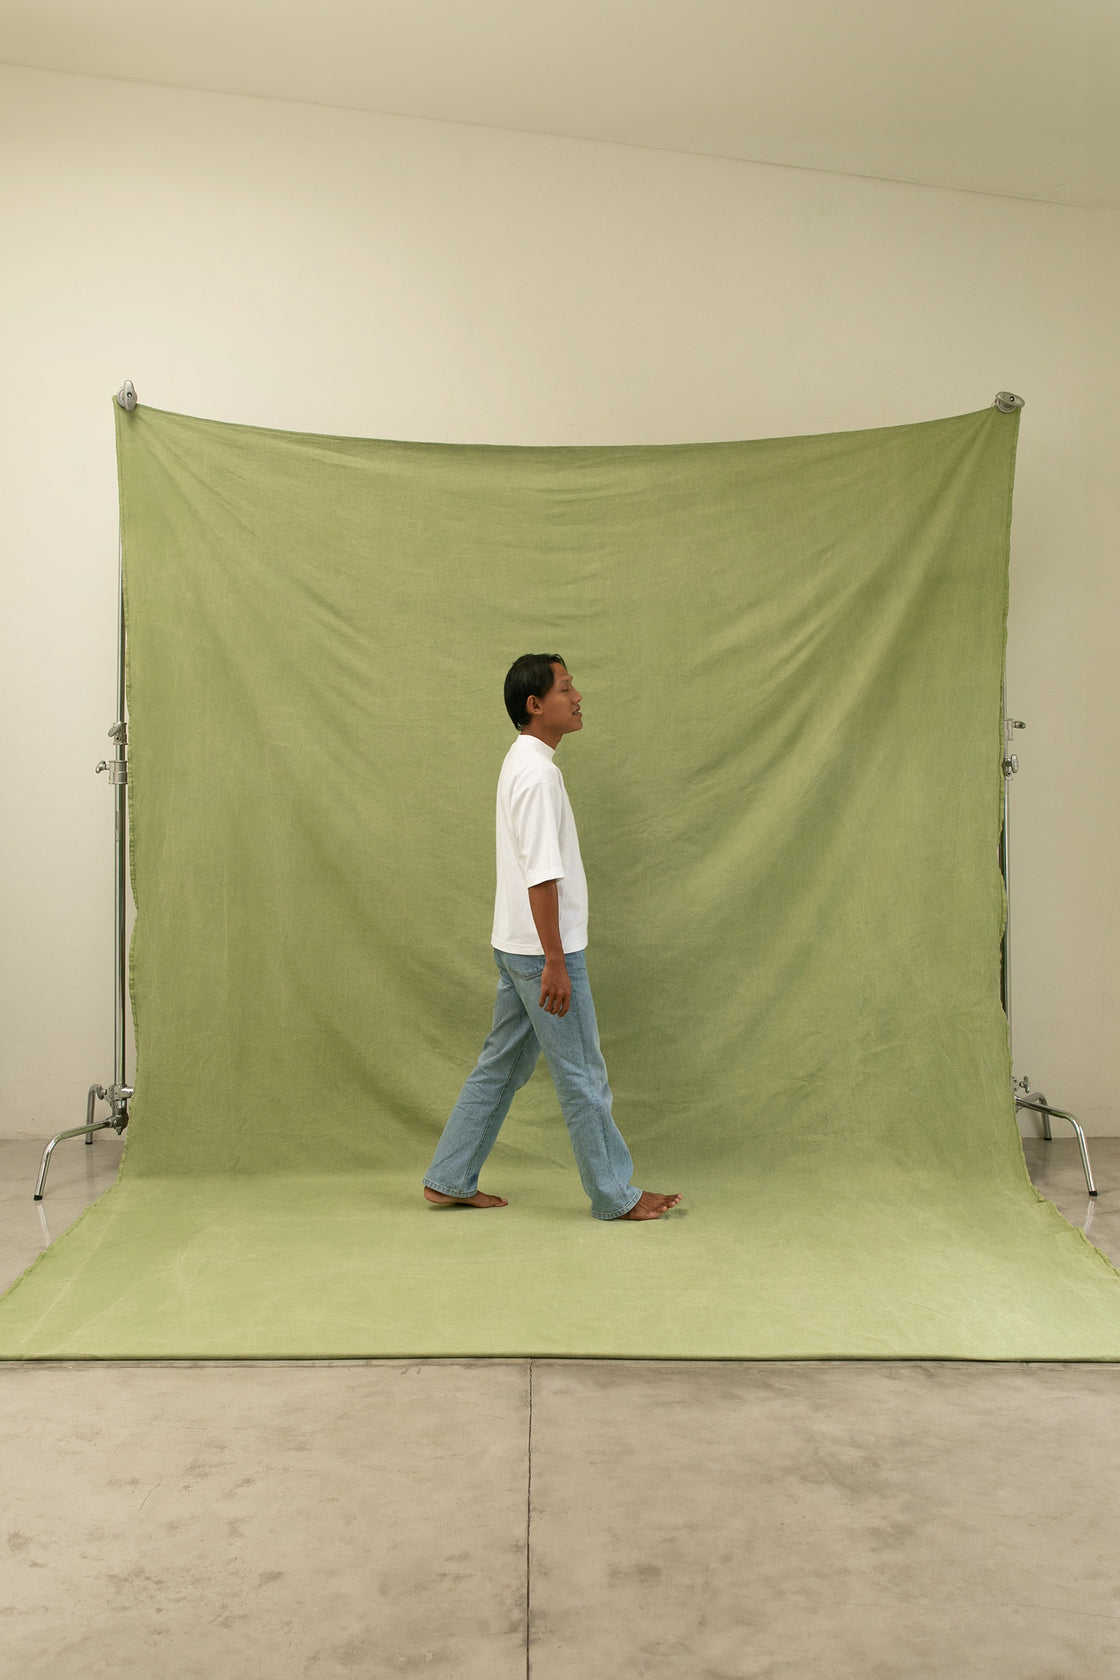 [3x5m] Canvas Backdrop Lime Green